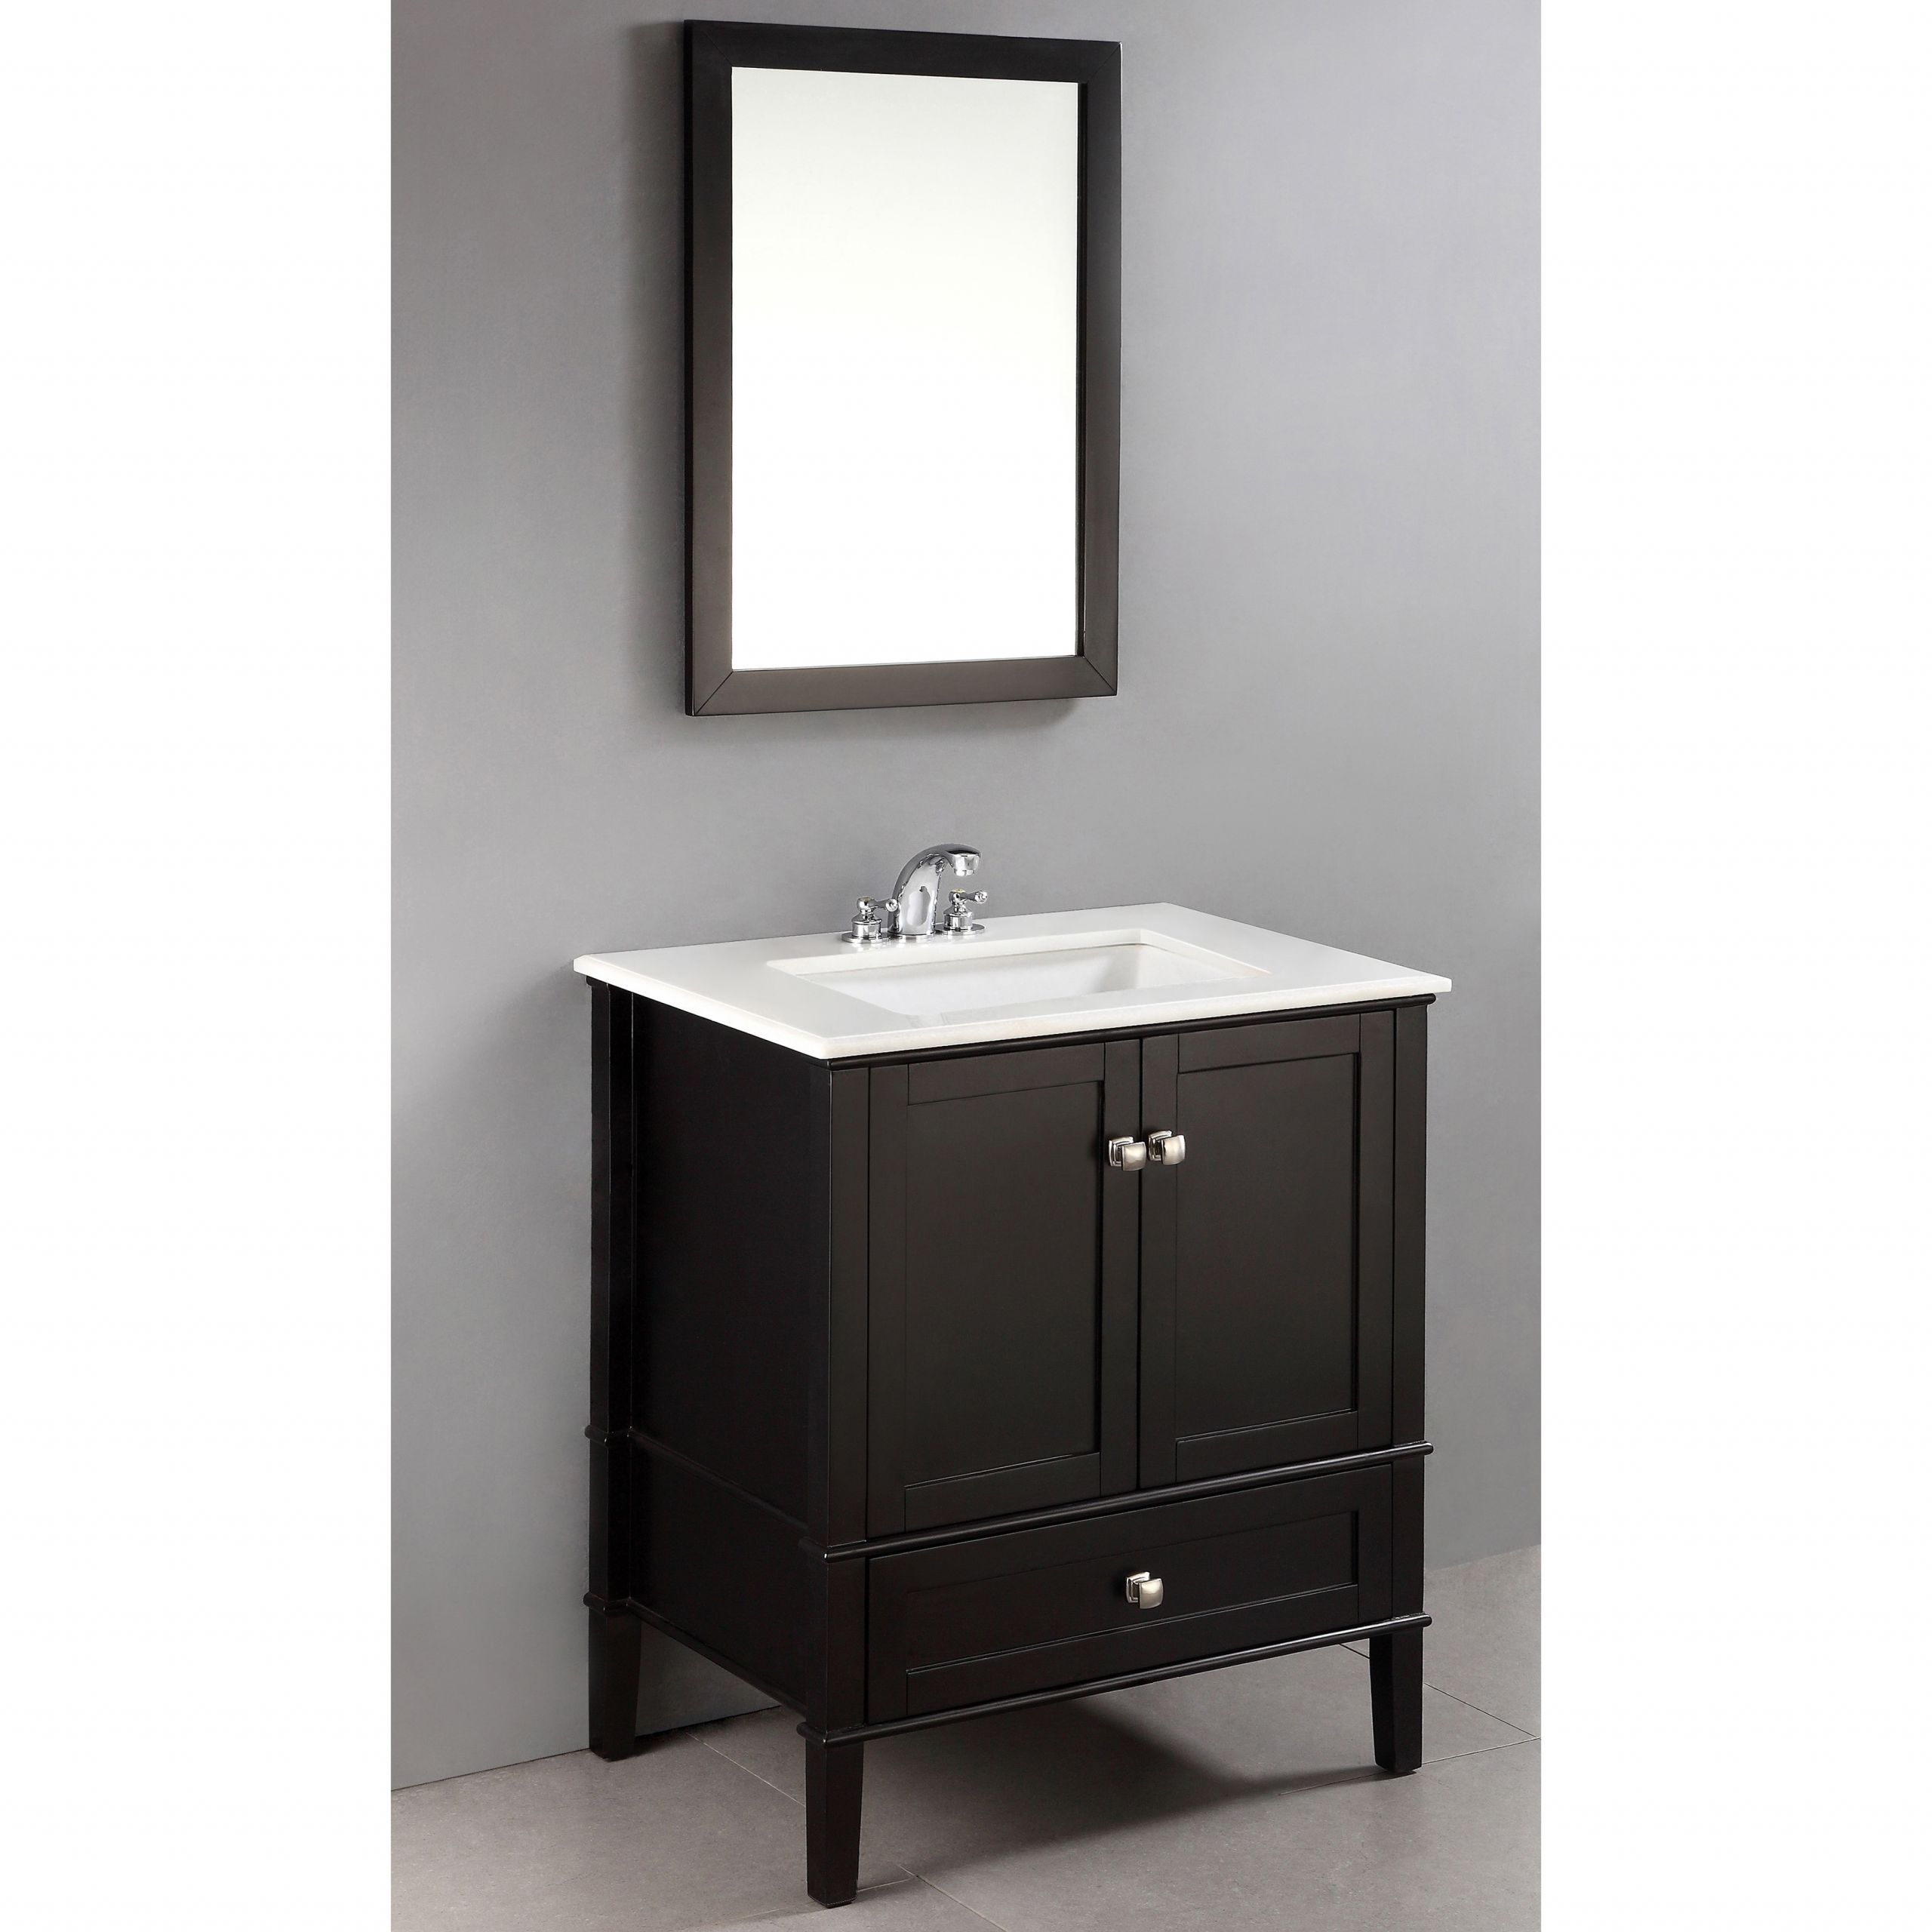 Black Bathroom Vanity With Top
 Windham Black 30 inch Bath Vanity with 2 Doors Bottom